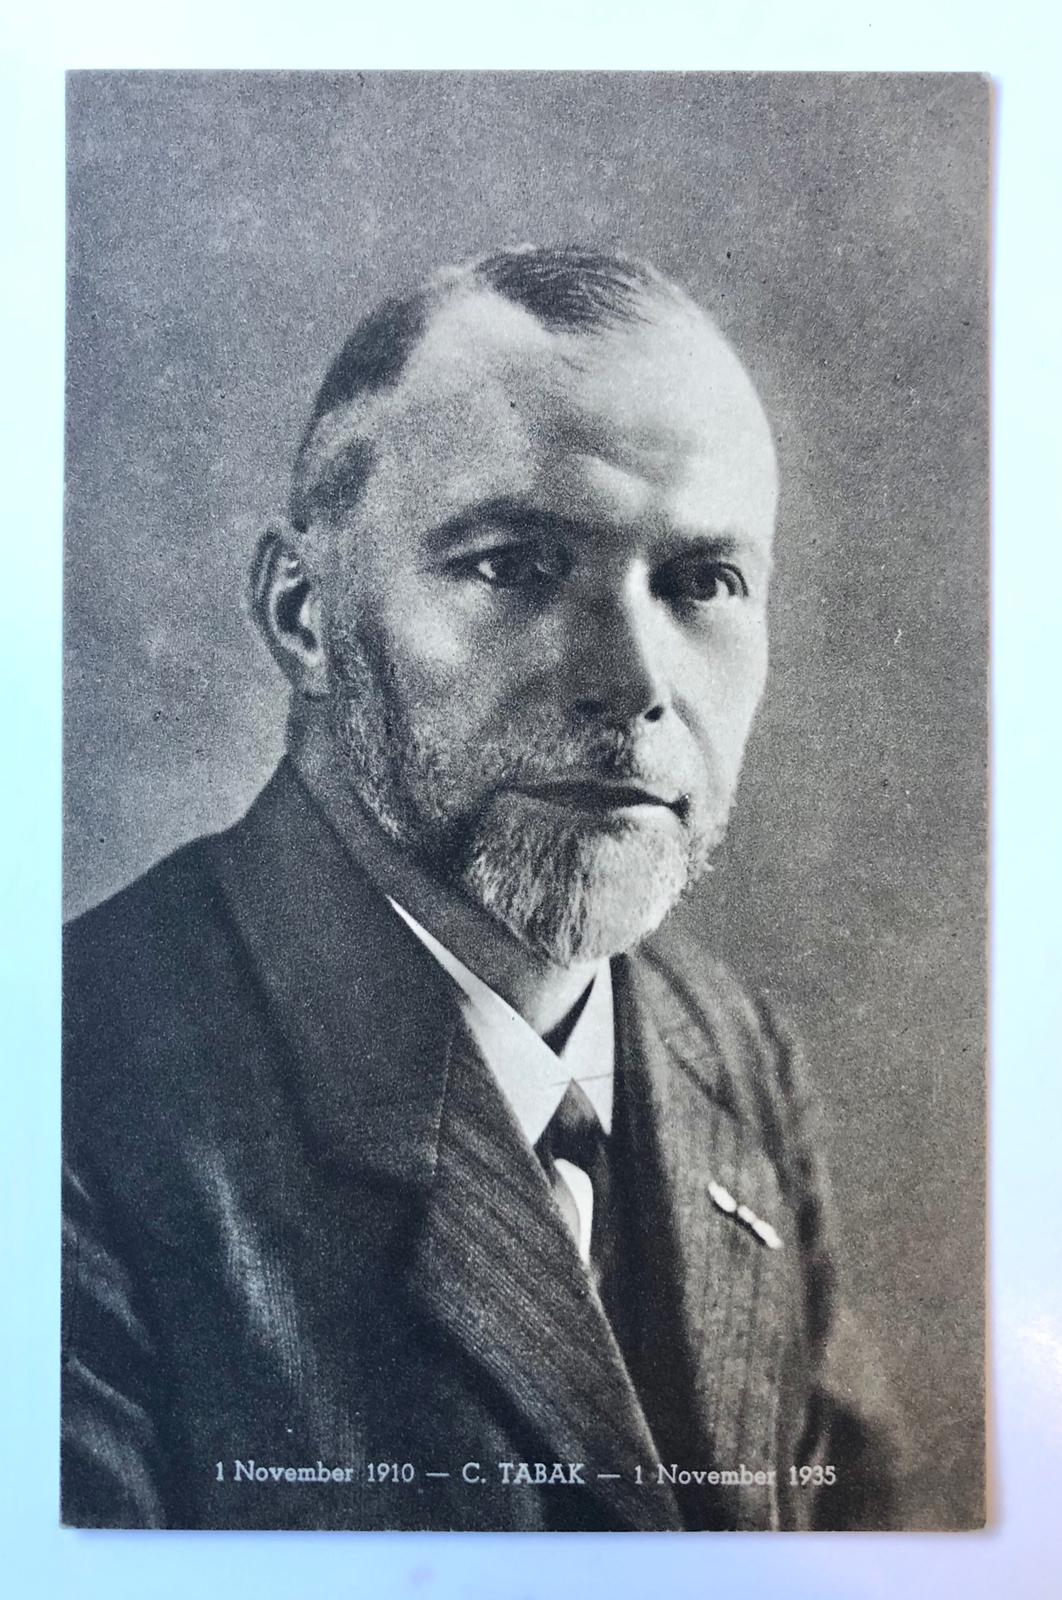  - [POSTCARD, 1935, TABAK, NED. JONGELINGS VERBOND] Prentbriefkaart met fotoportret van C. Tabak, jubilaris 1910-1935 bij het Ned. Jongelingsverbond, 1935.